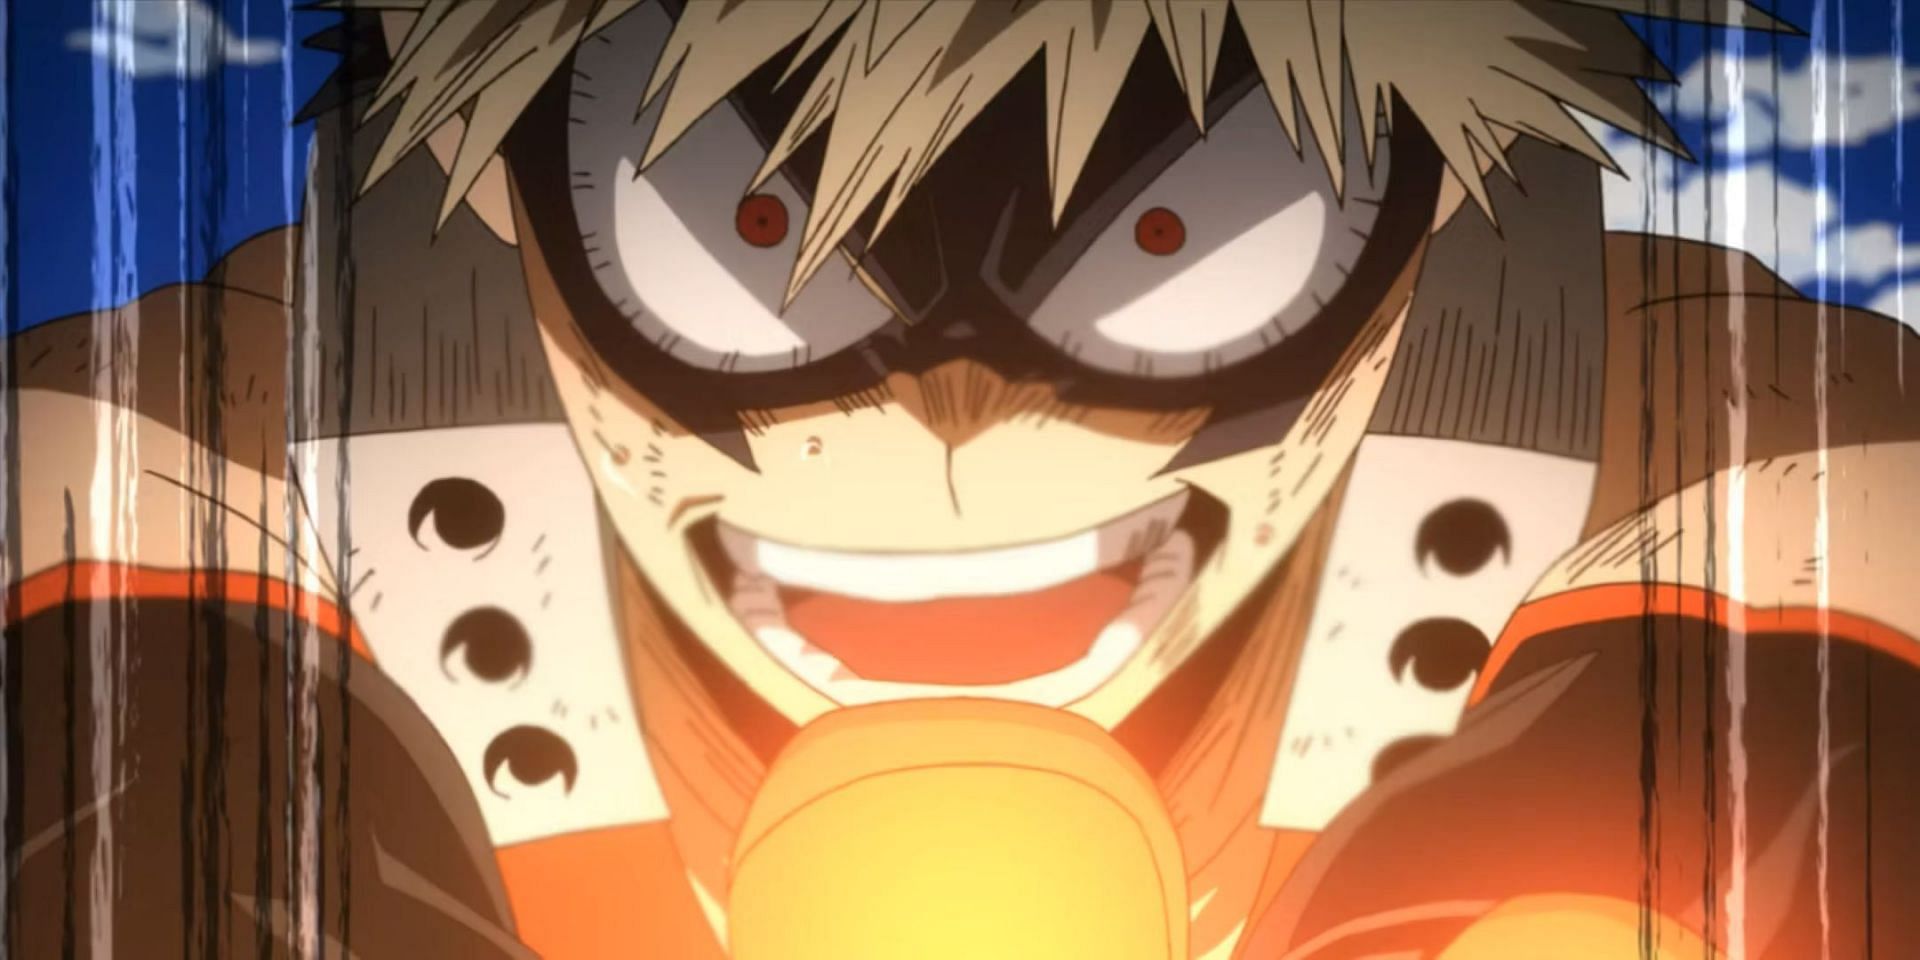 Bakugo, as seen in the anime (Image via Bones)